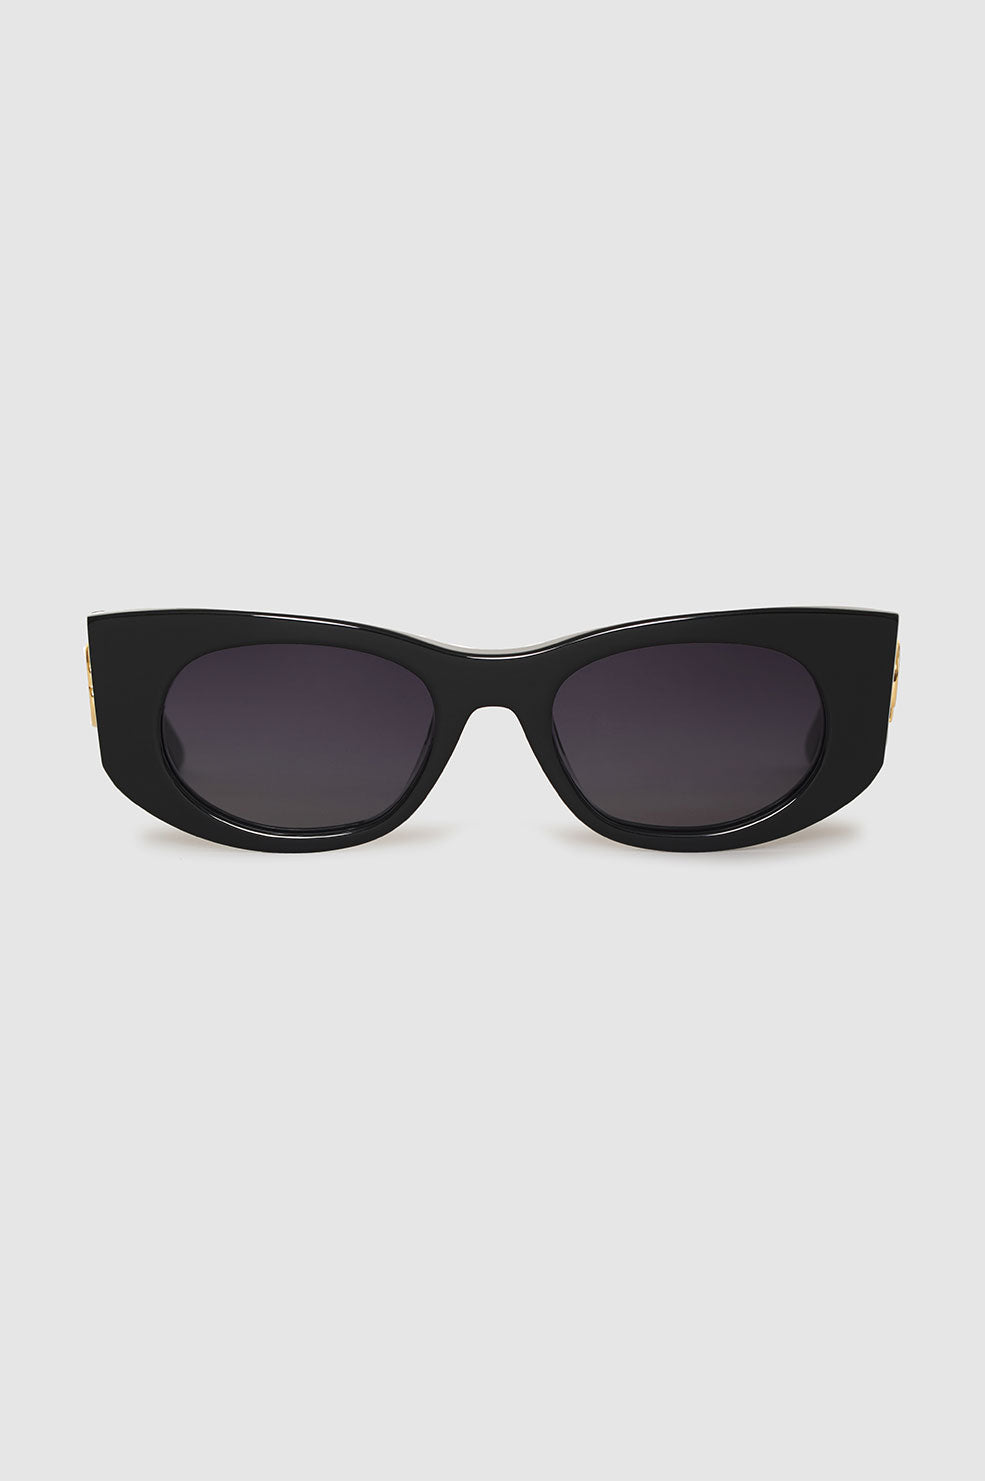 ANINE BING Madrid Sunglasses - Black - Front View